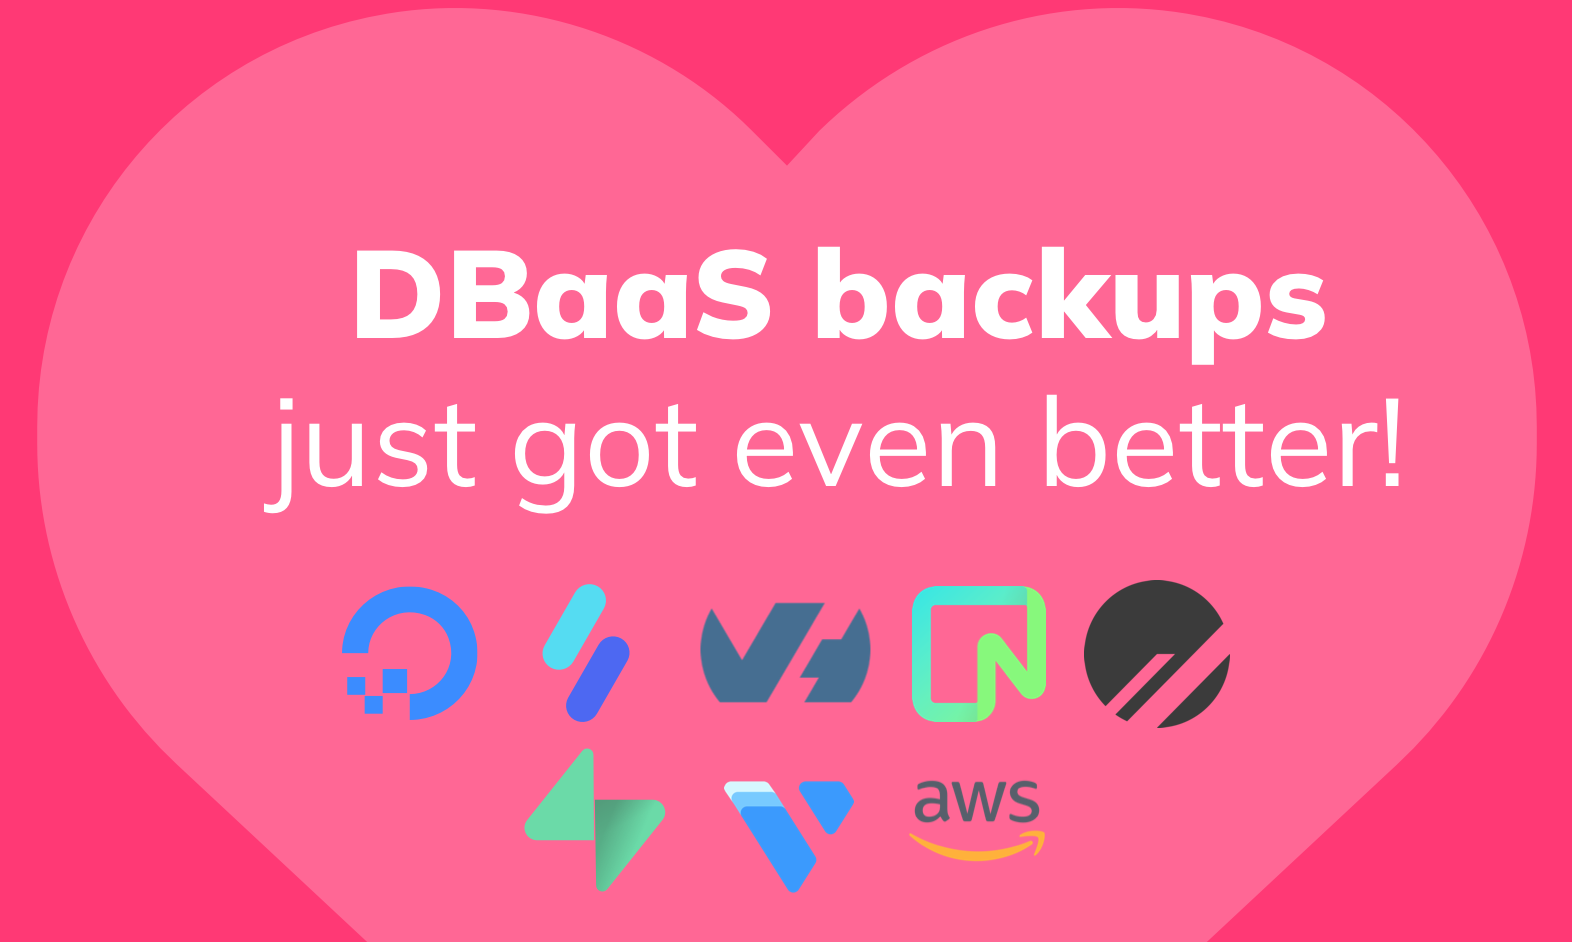 Database-as-a-Service backups just got (even) better!